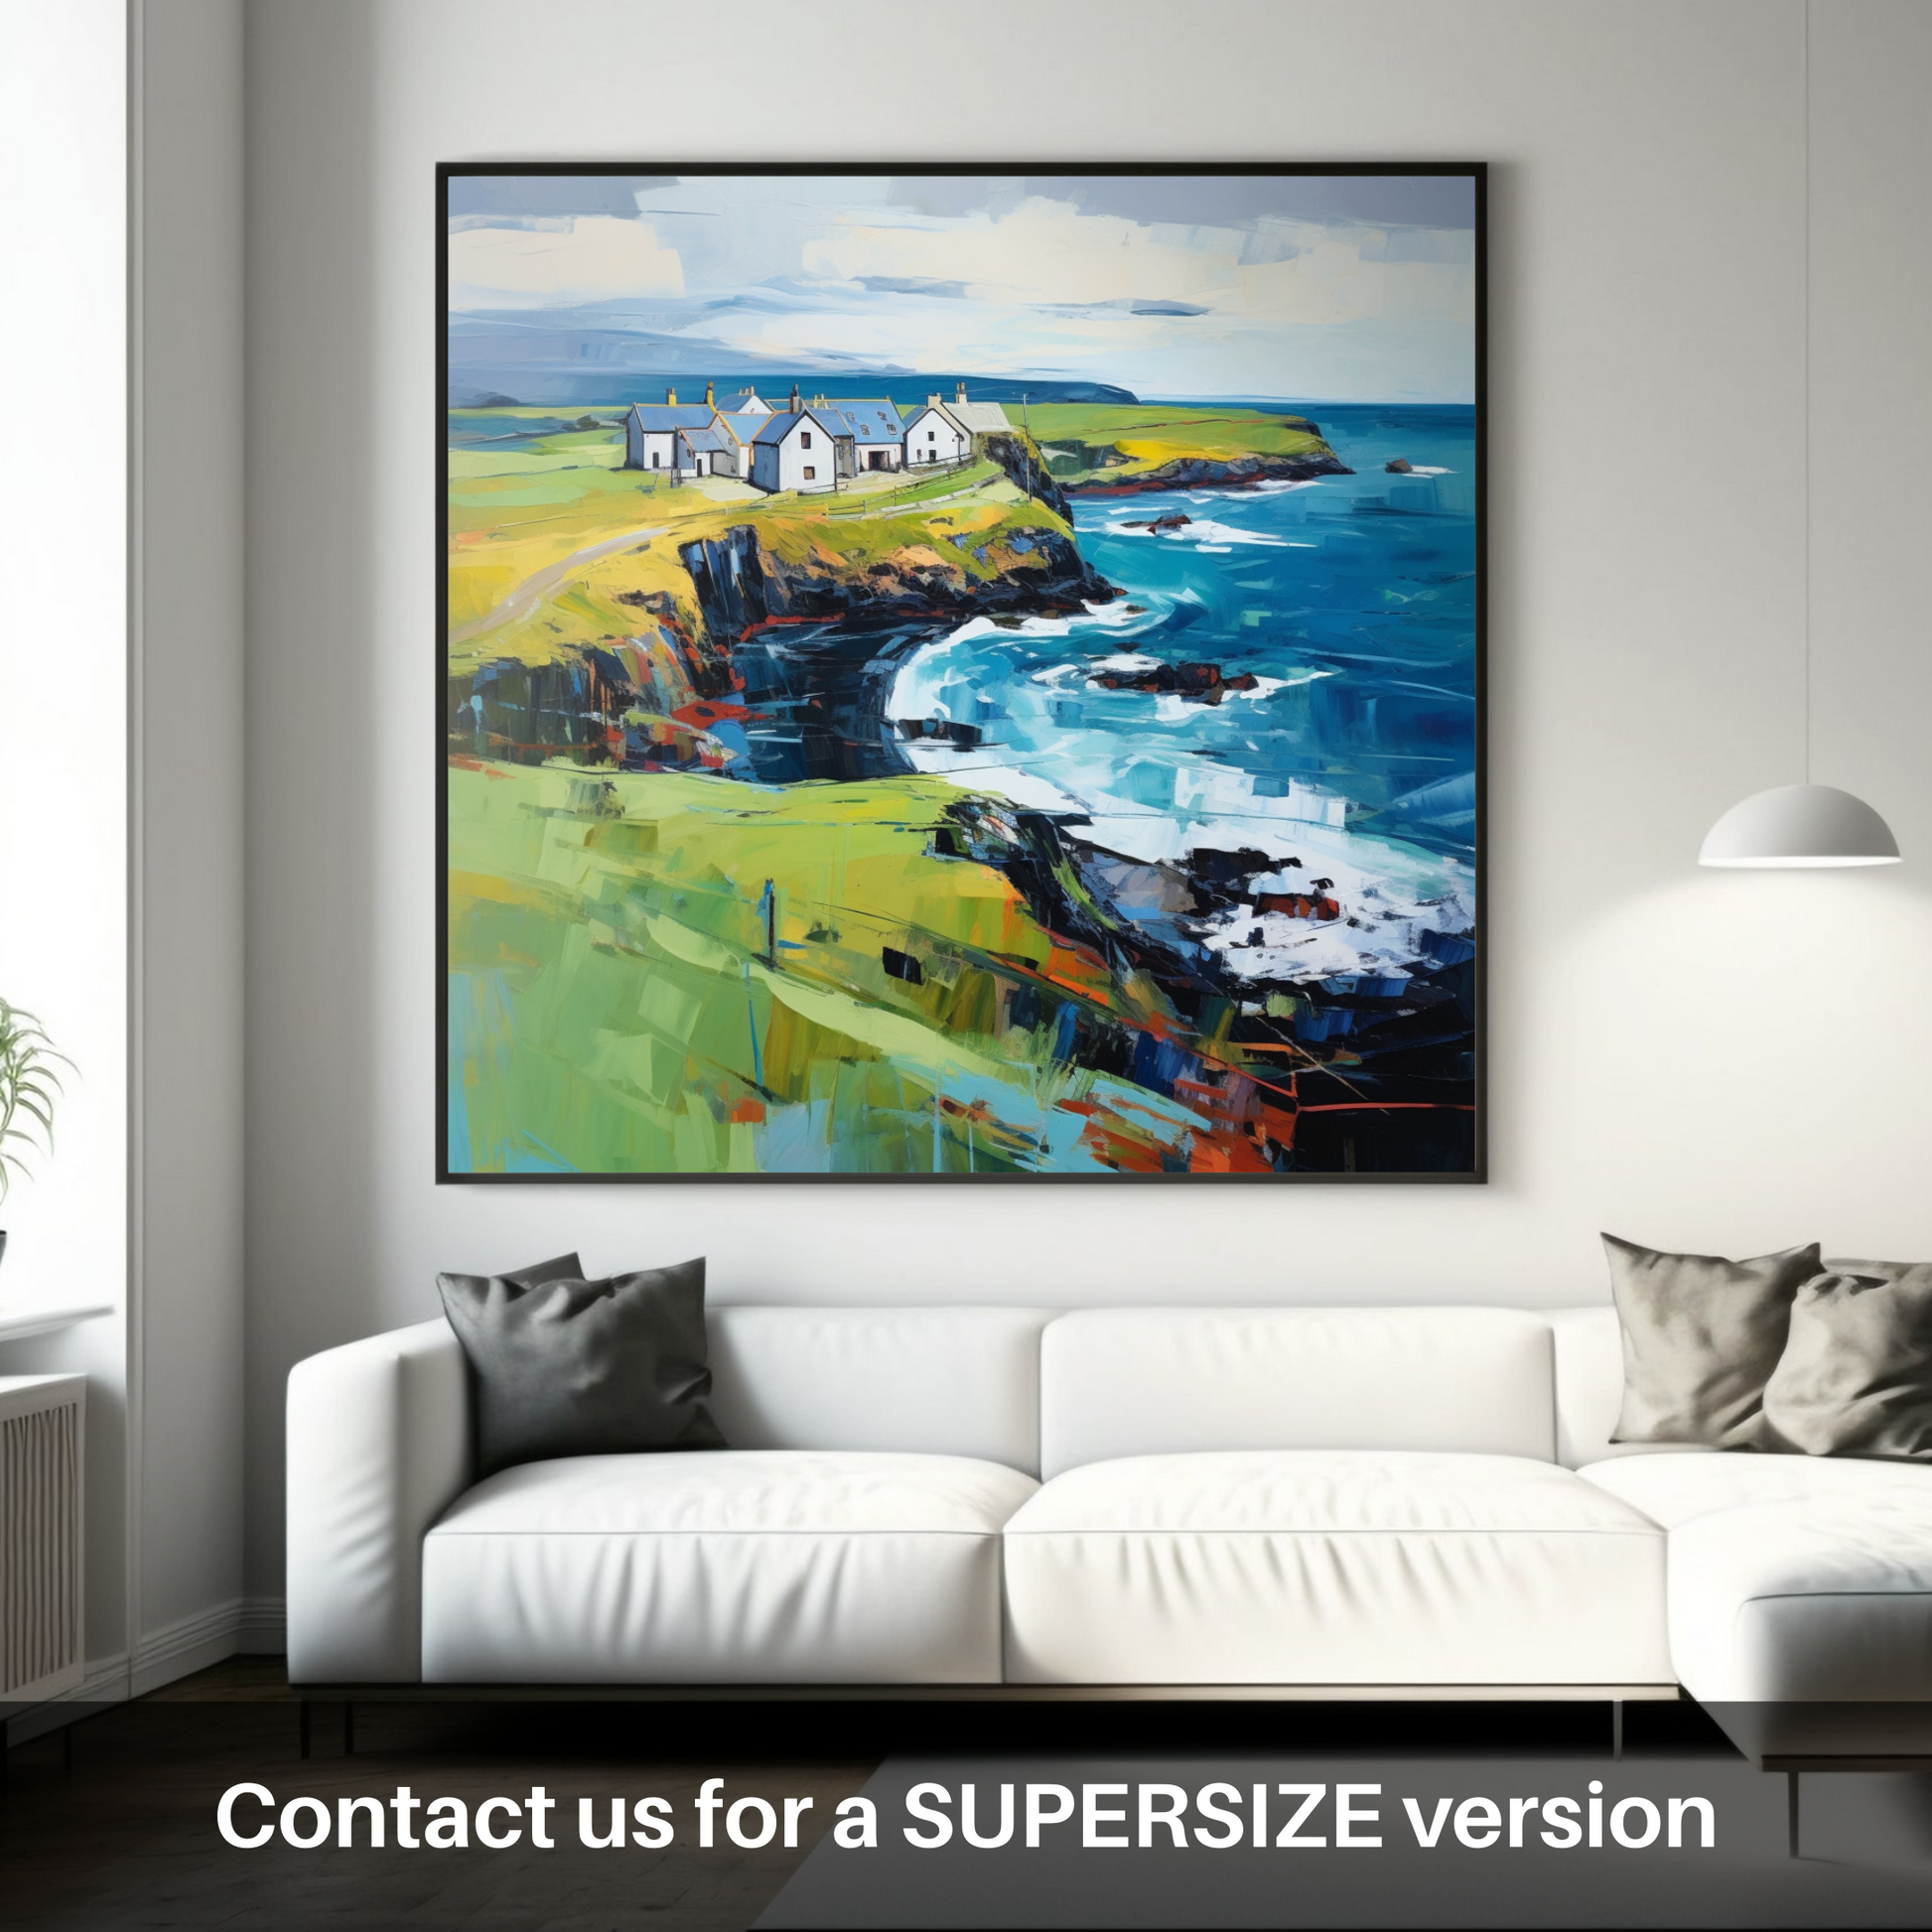 Huge supersize print of Shetland, North of mainland Scotland